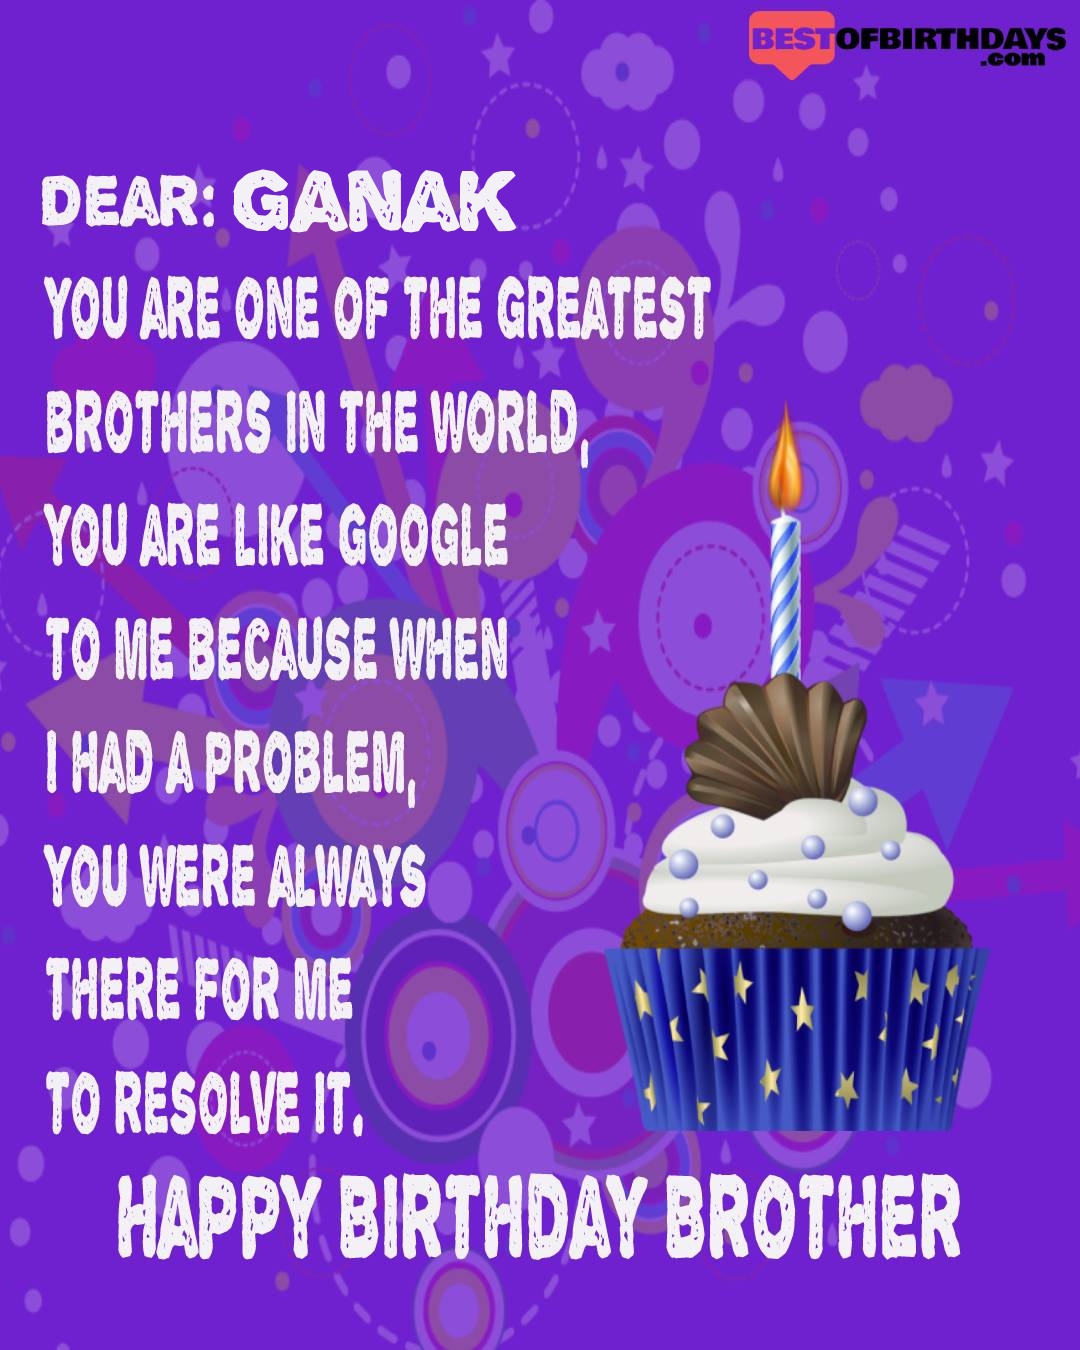 Happy birthday ganak bhai brother bro